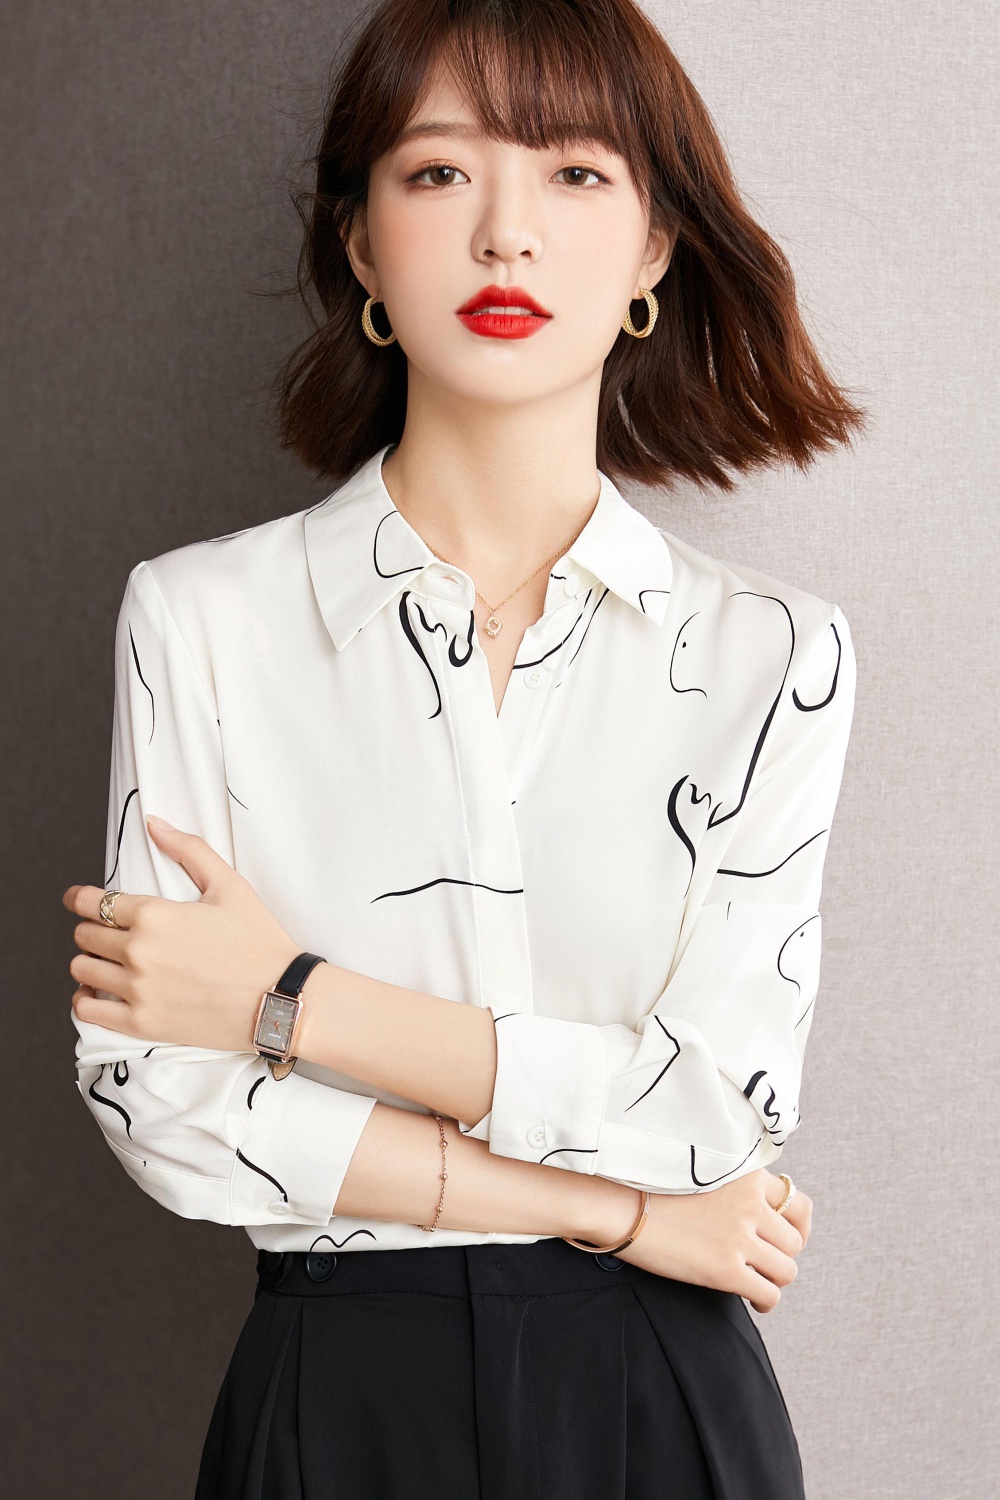 Silk long sleeve tops printing shirt for women